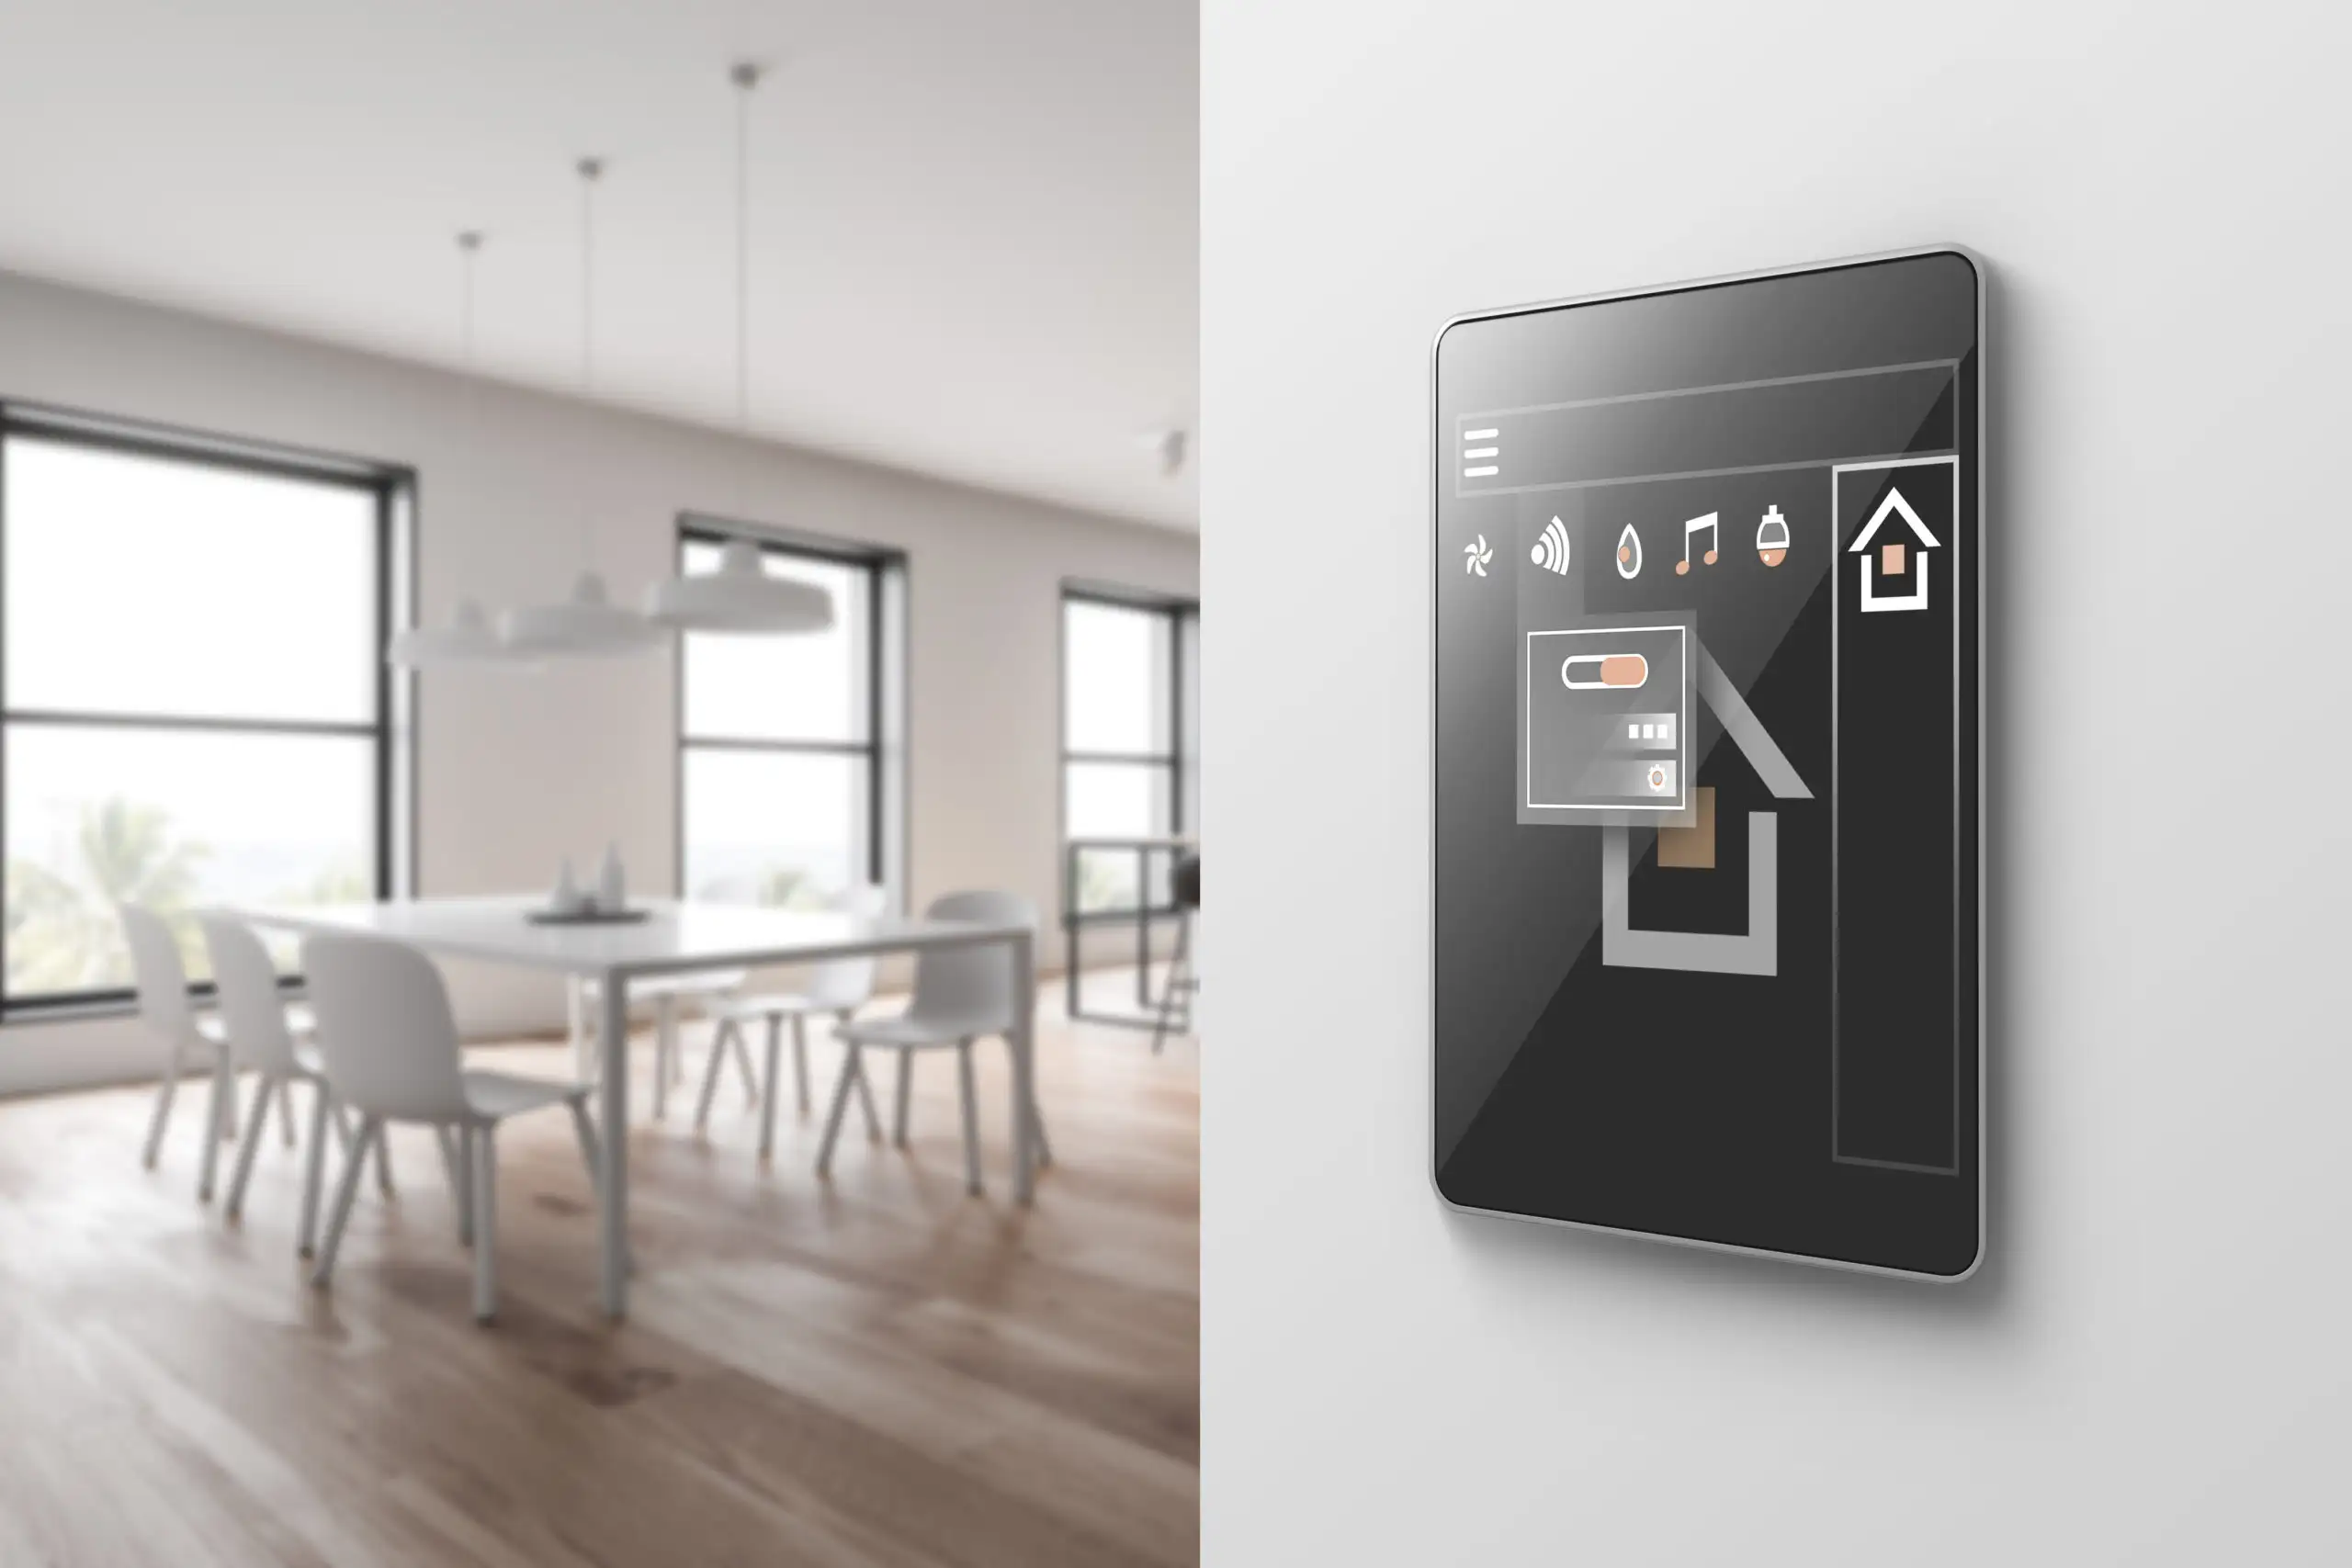 iPad control panel in smart home